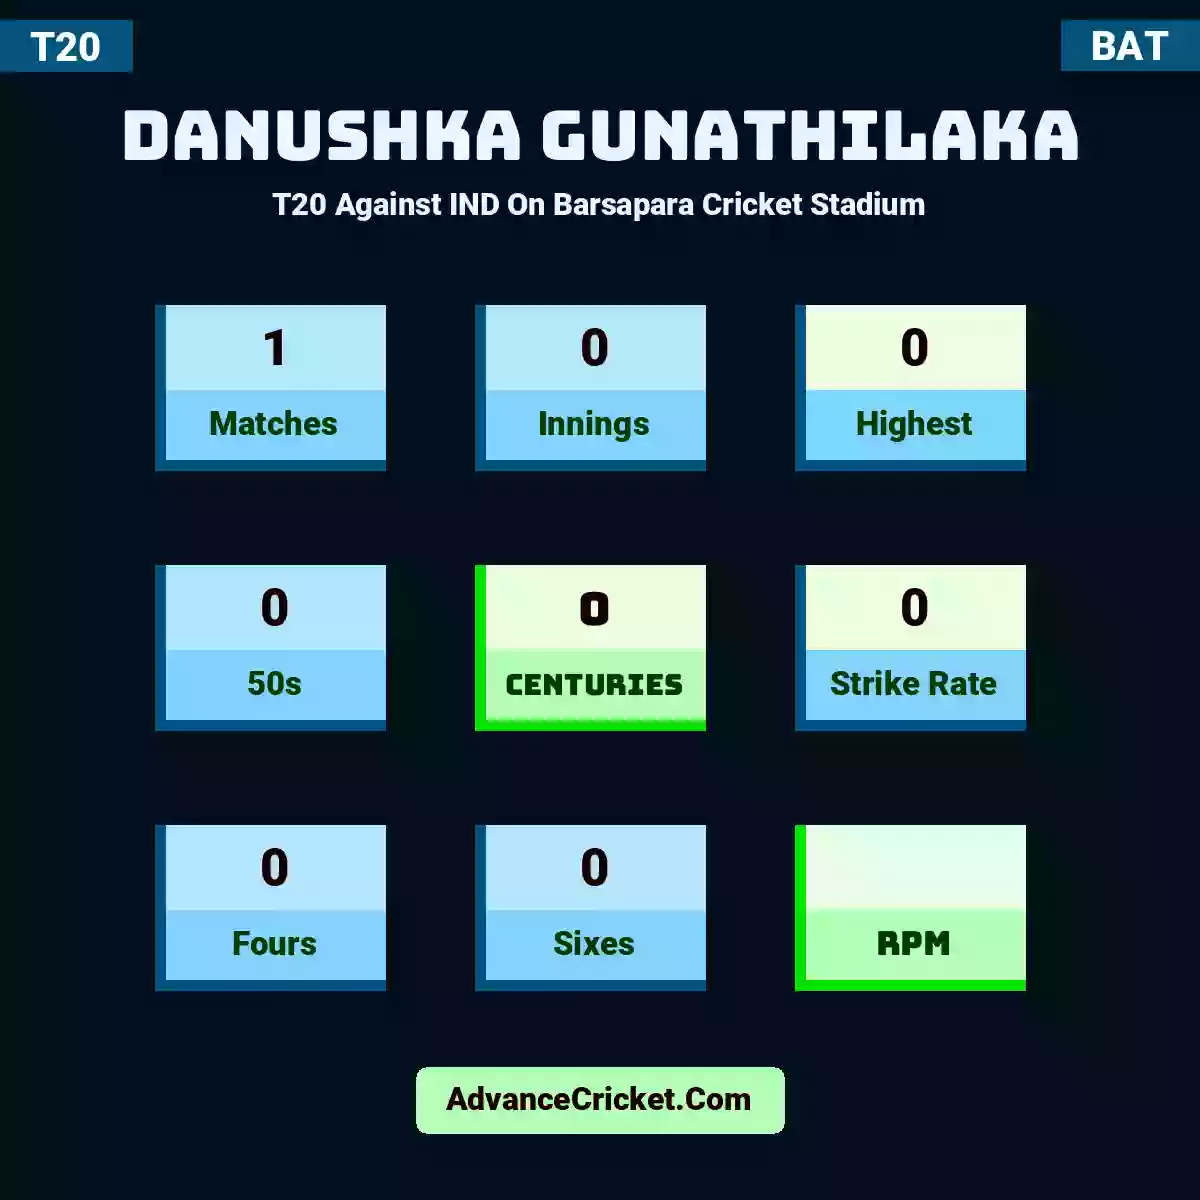 Danushka Gunathilaka T20  Against IND On Barsapara Cricket Stadium, Danushka Gunathilaka played 1 matches, scored 0 runs as highest, 0 half-centuries, and 0 centuries, with a strike rate of 0. D.Gunathilaka hit 0 fours and 0 sixes.